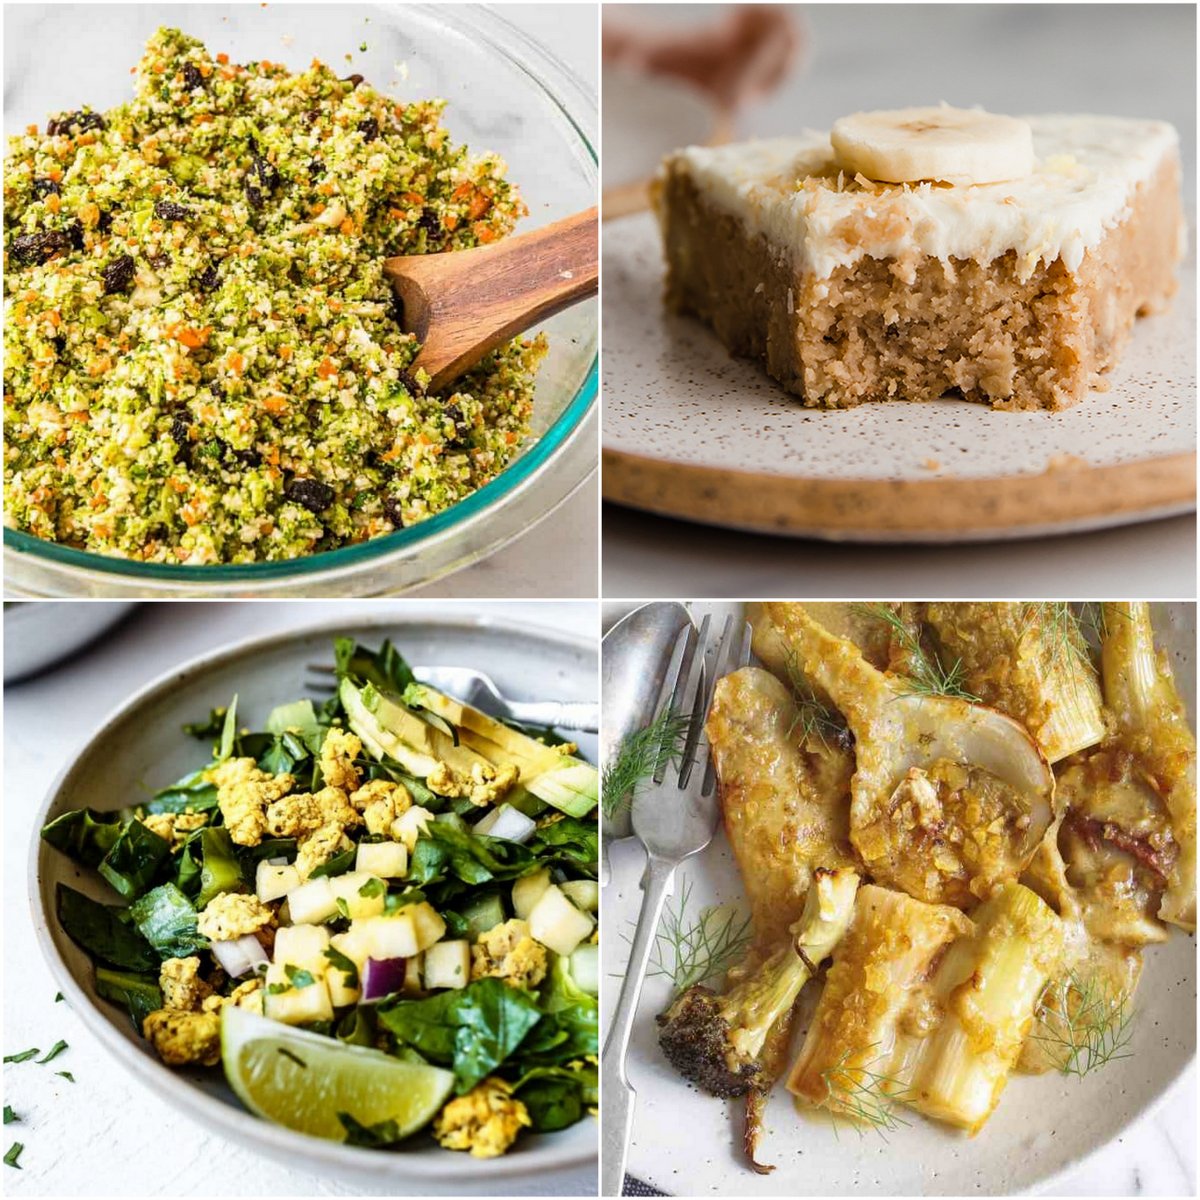 Paleo AIP Recipe Roundtable #368 | Phoenix Helix - *Featured Recipes: Broccoli Power Salad, Coconut Flour Lemon Banana Cake, Easy Ground Chicken Taco Salad, and Fennel Broccoli & Leek Gratin.